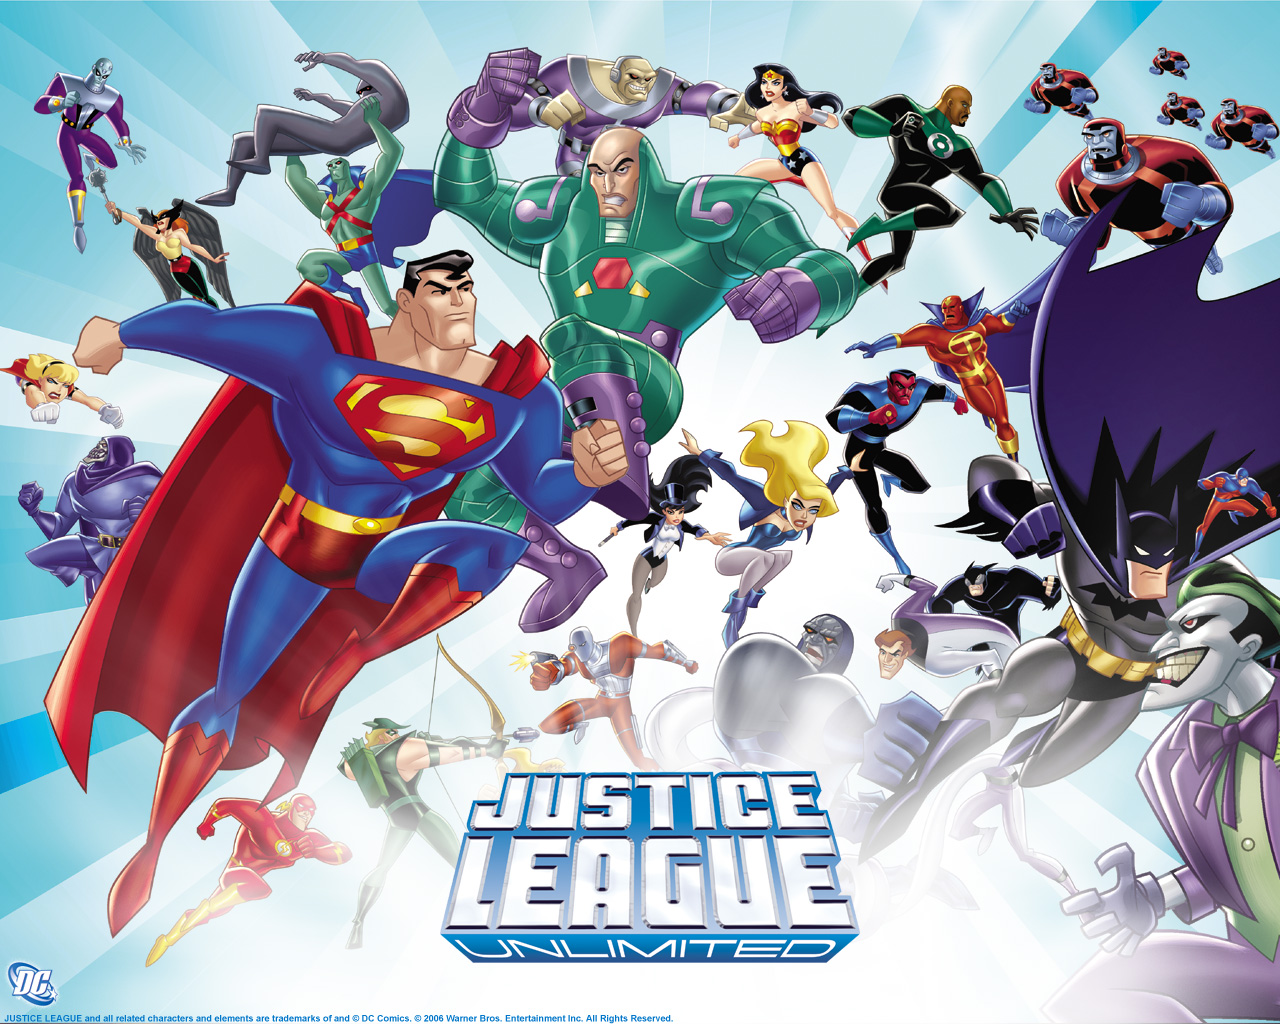 Justice League: Unlimited #8